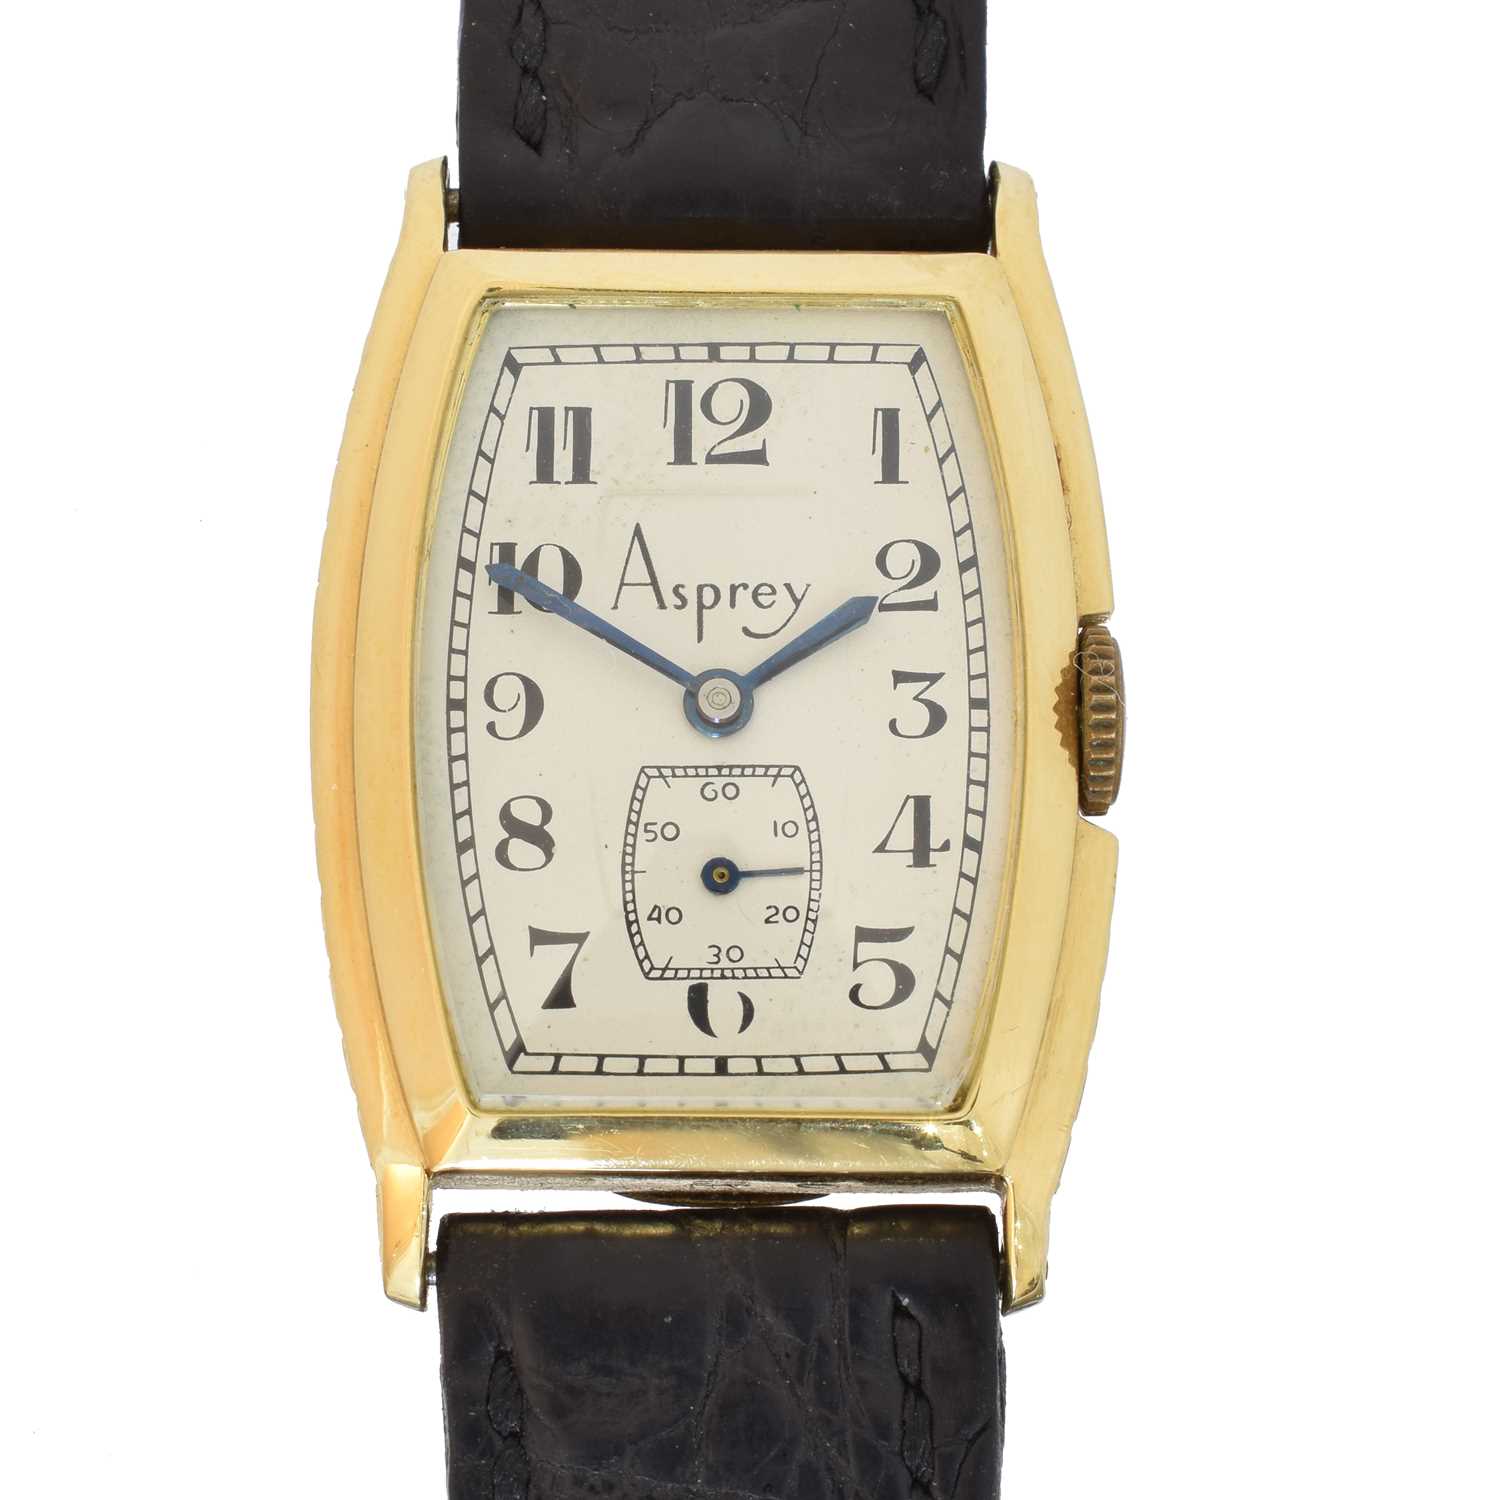 Lot An 18ct gold Asprey wristwatch